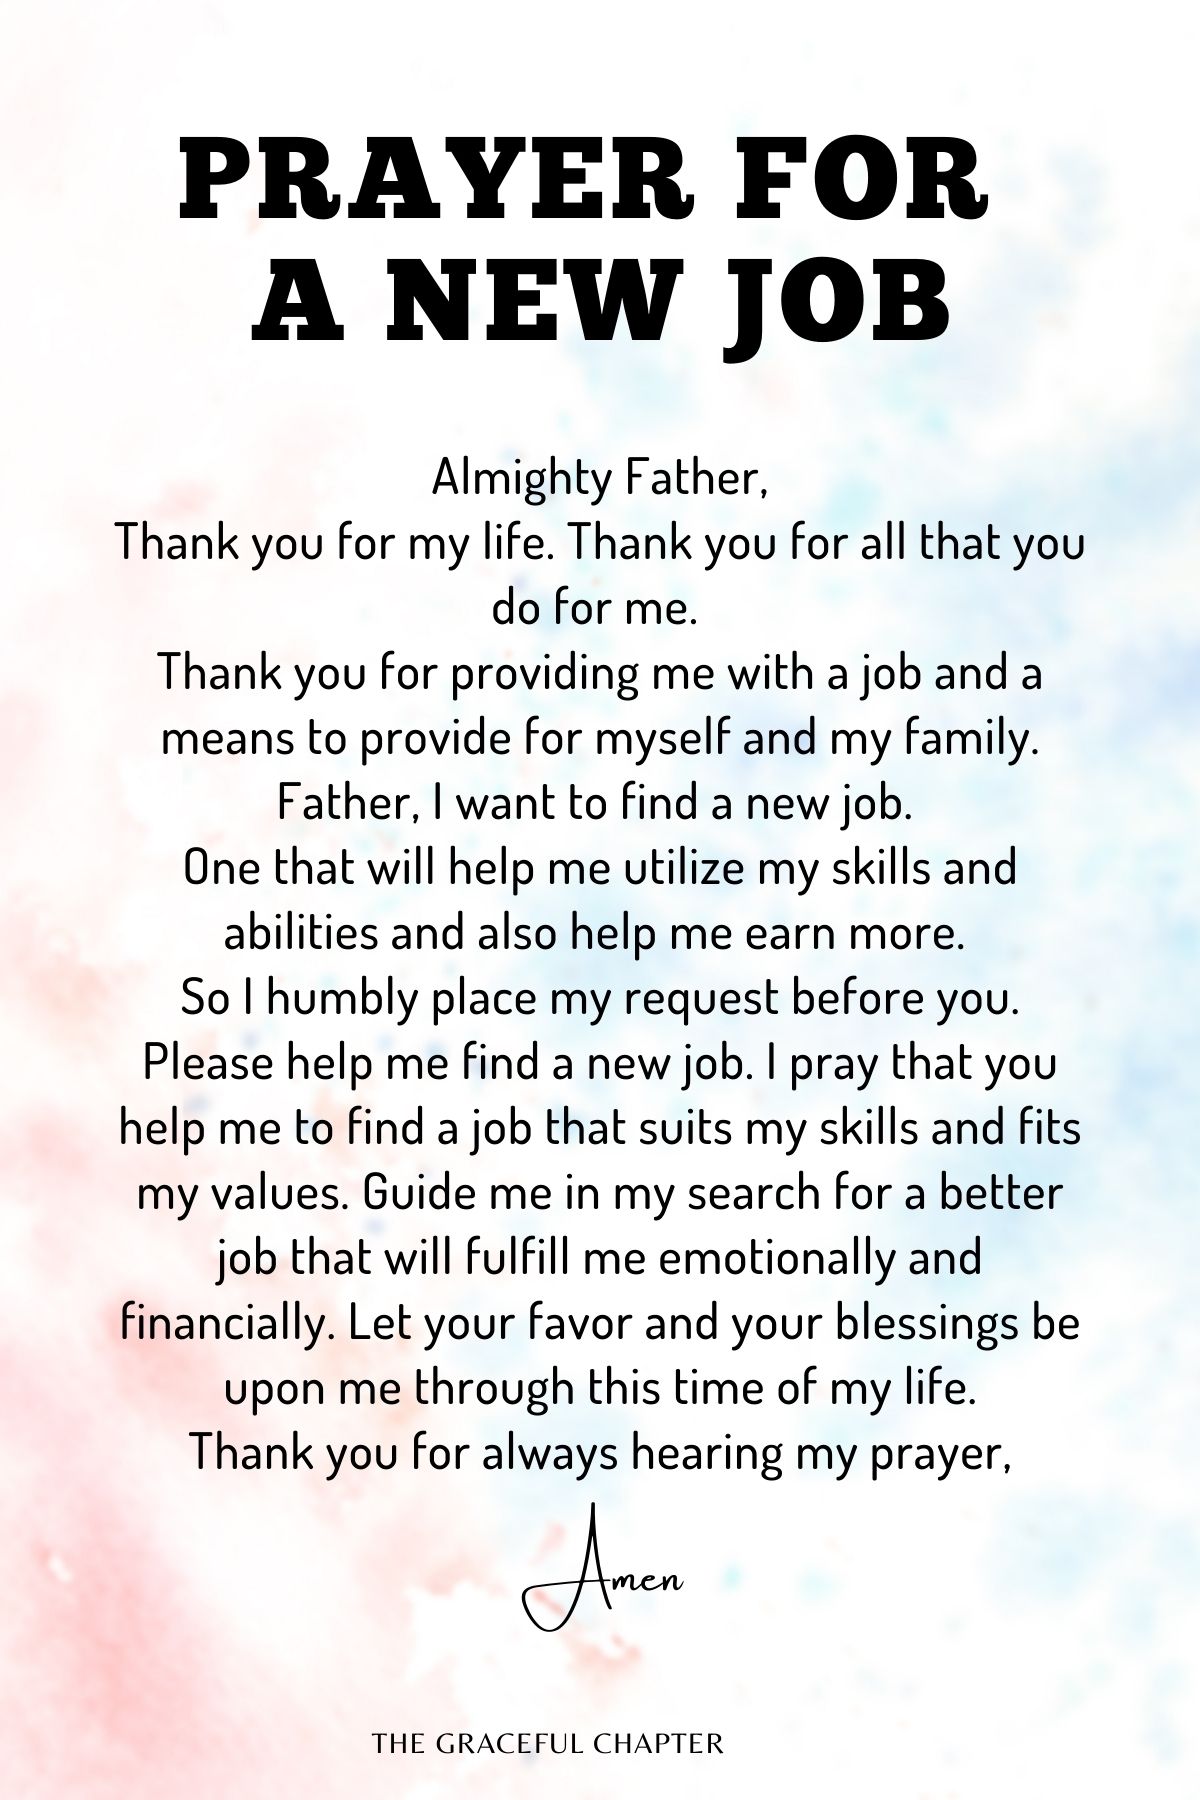 Prayer for a new job 